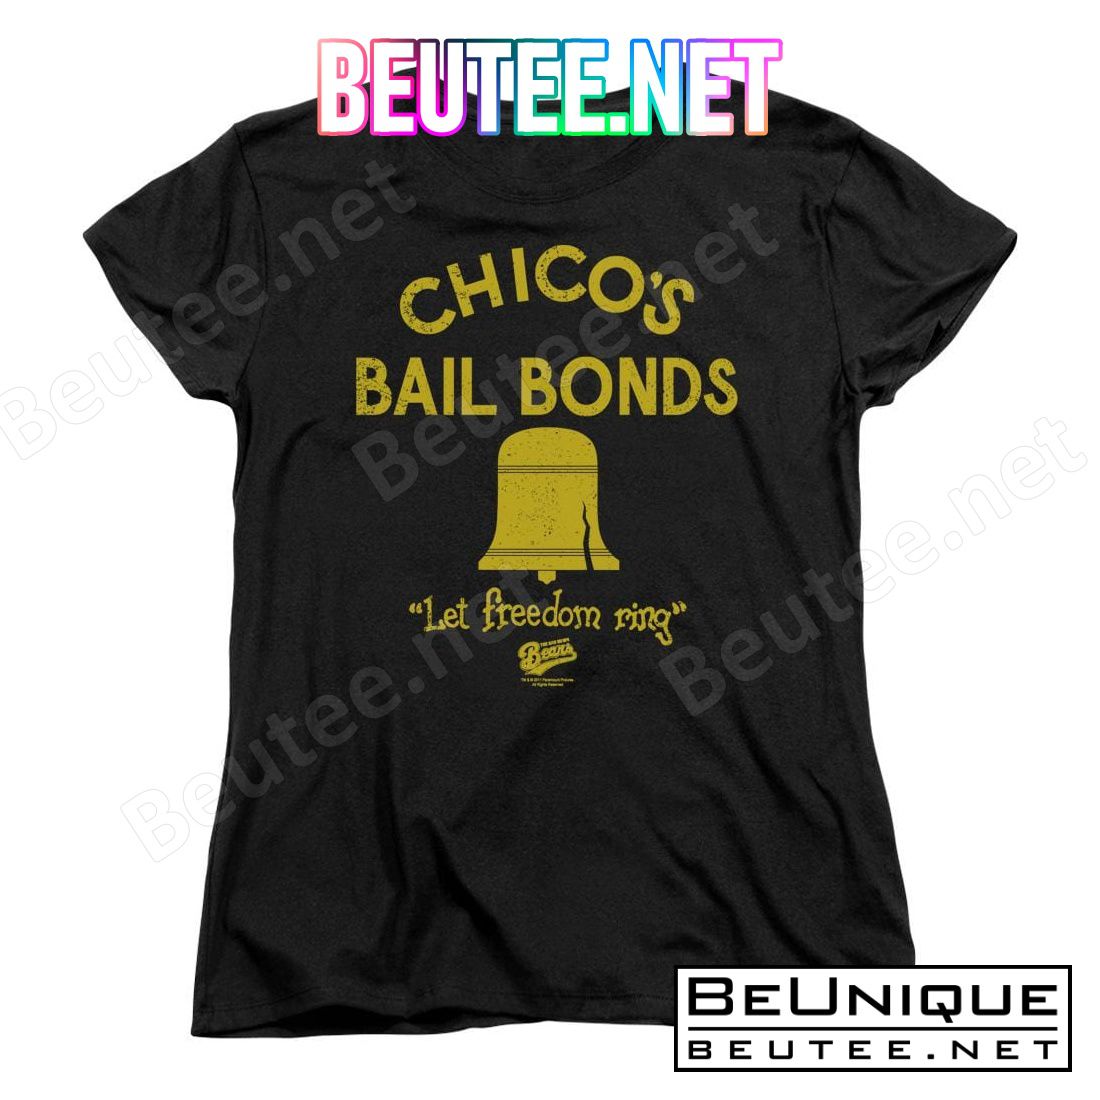 Bad News Bears Chicos Bail Bonds Shirt